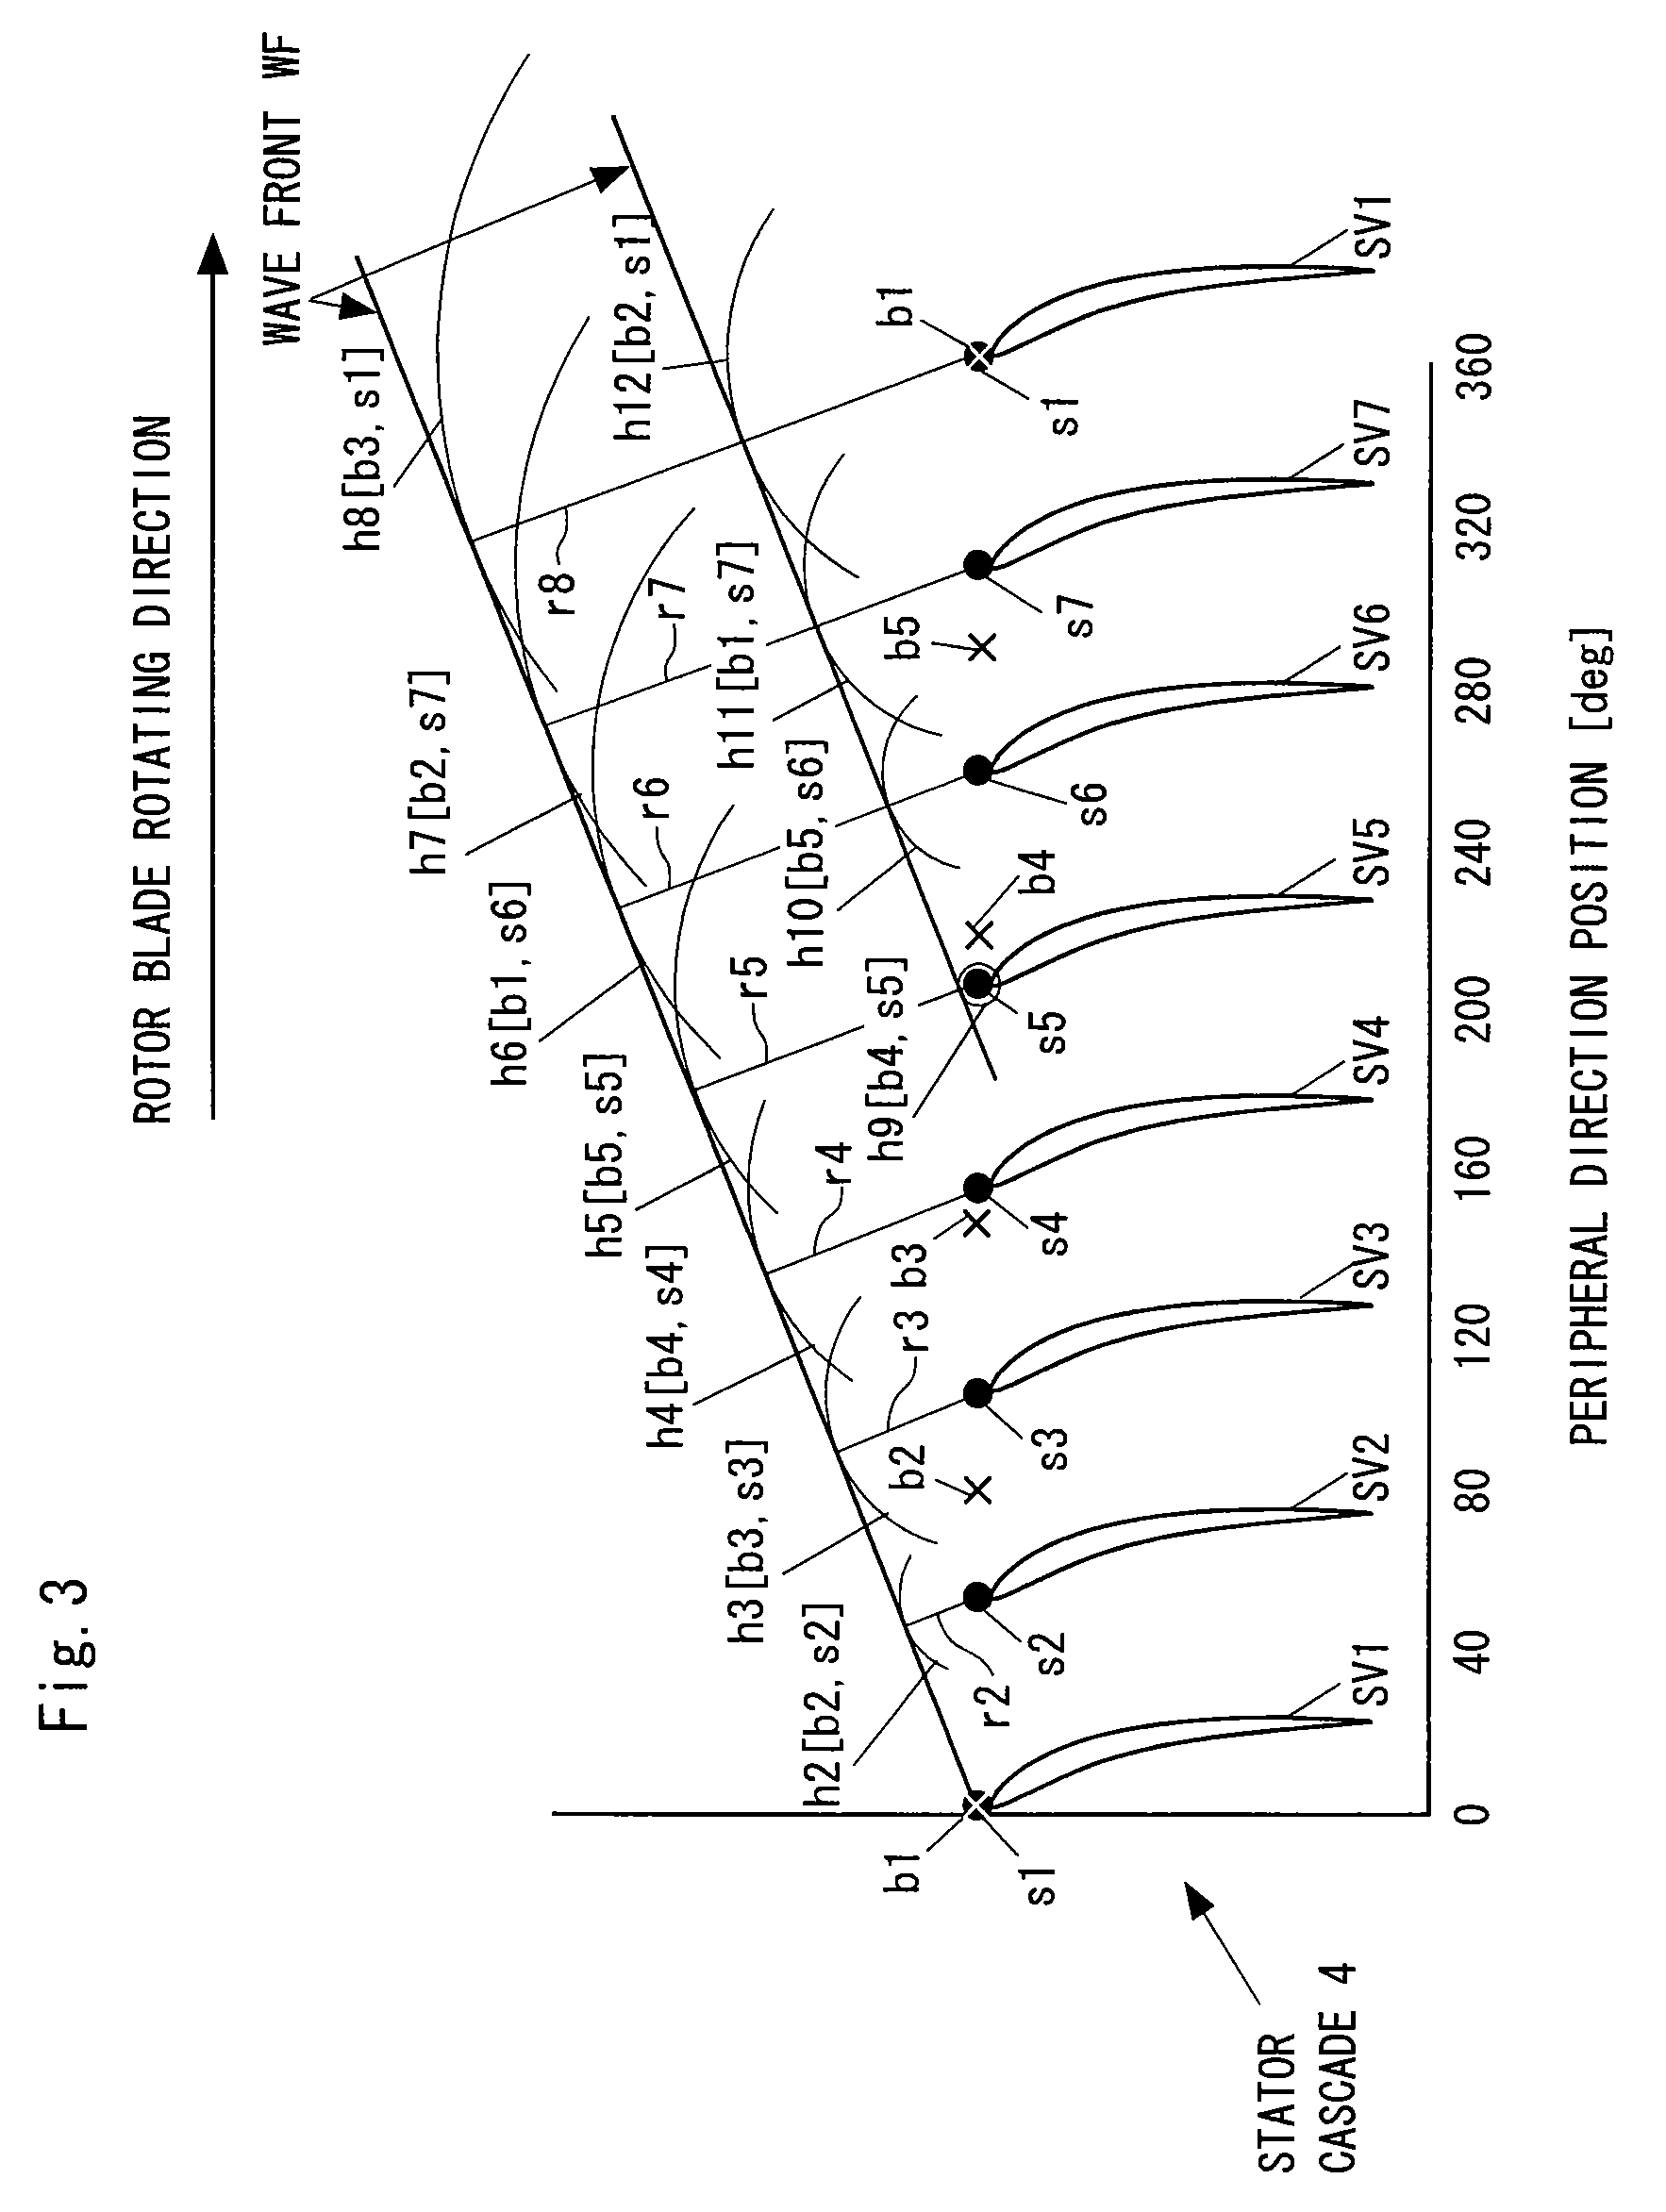 Stator cascade of turbo type fluid machine